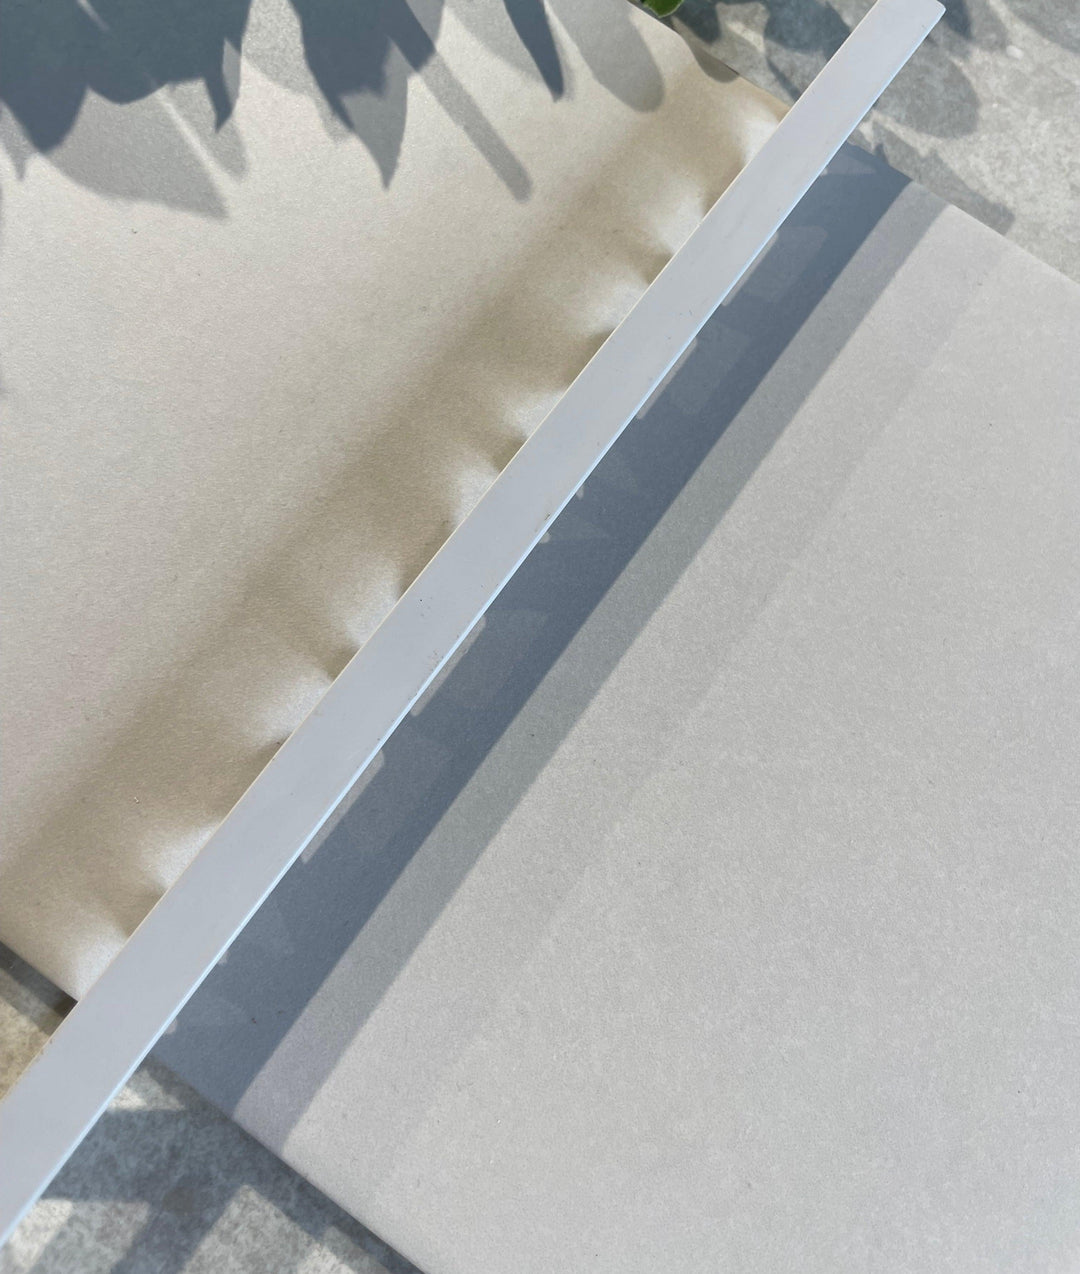 10mm Whisper Grey PVC Square Edge Trim - 2.5M length